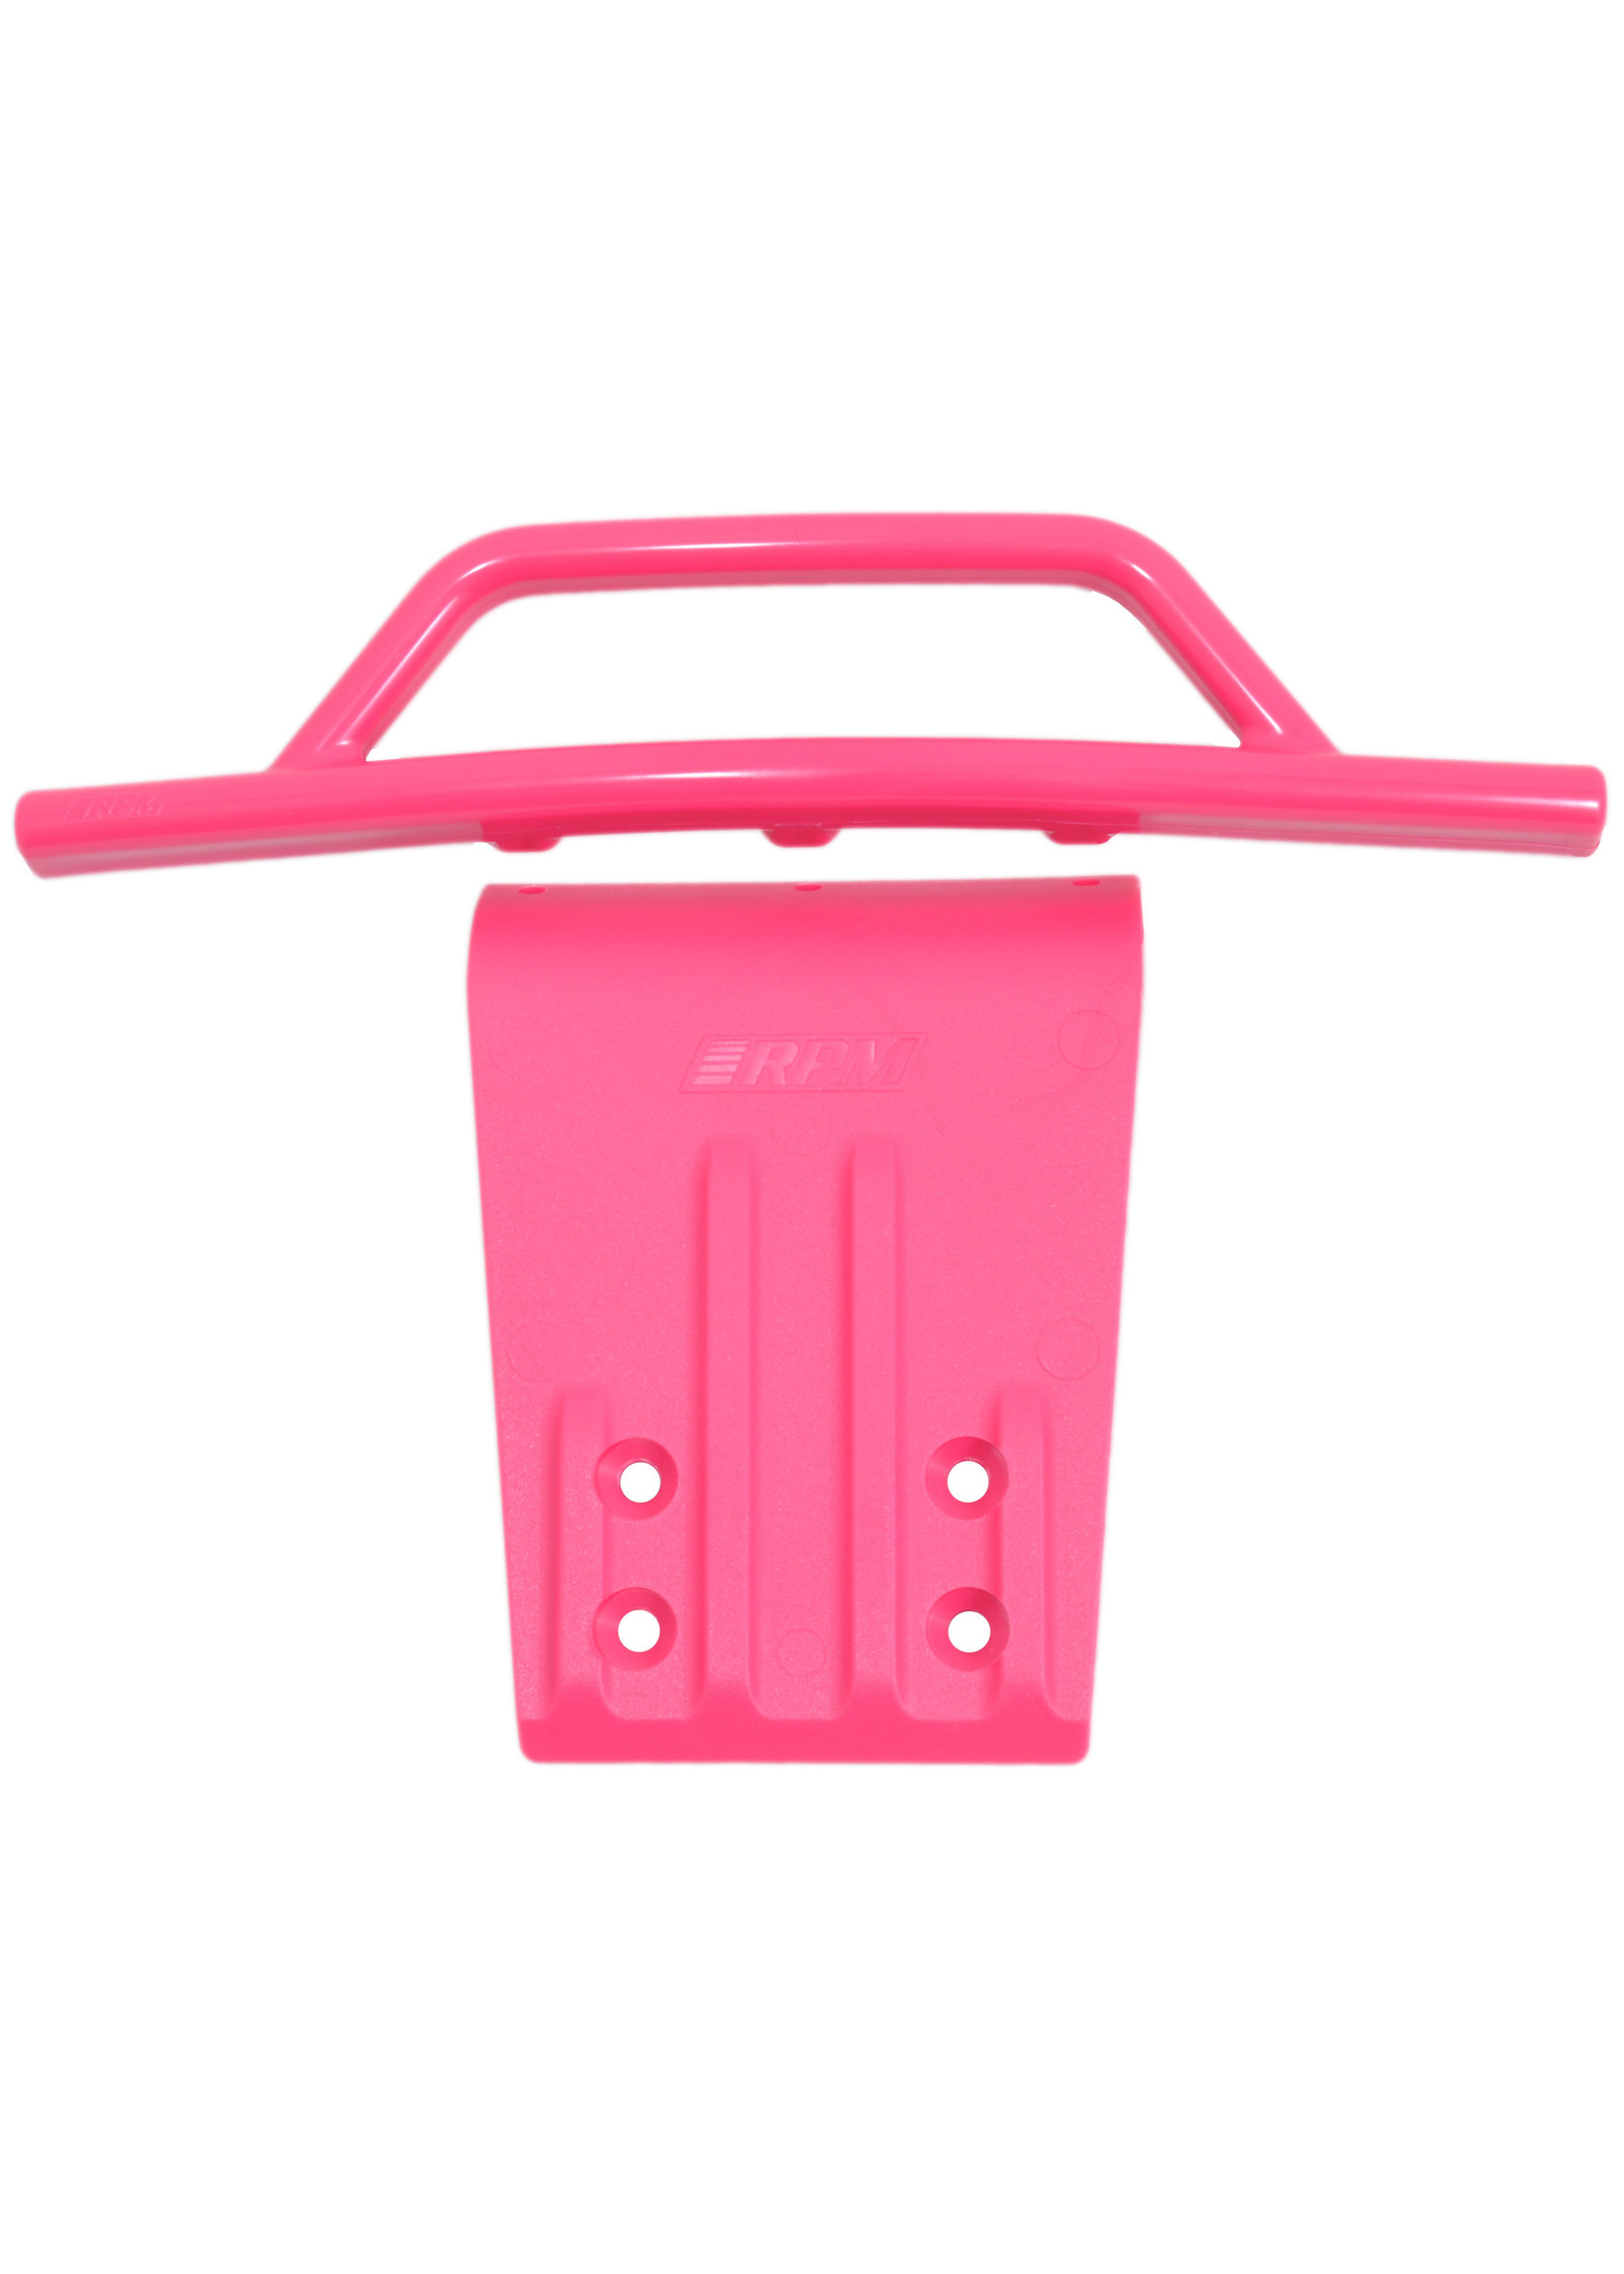 RPM 80957 - Front Bumper & Bumper Skid Plate for Traxxas Slash 2WD - Pink